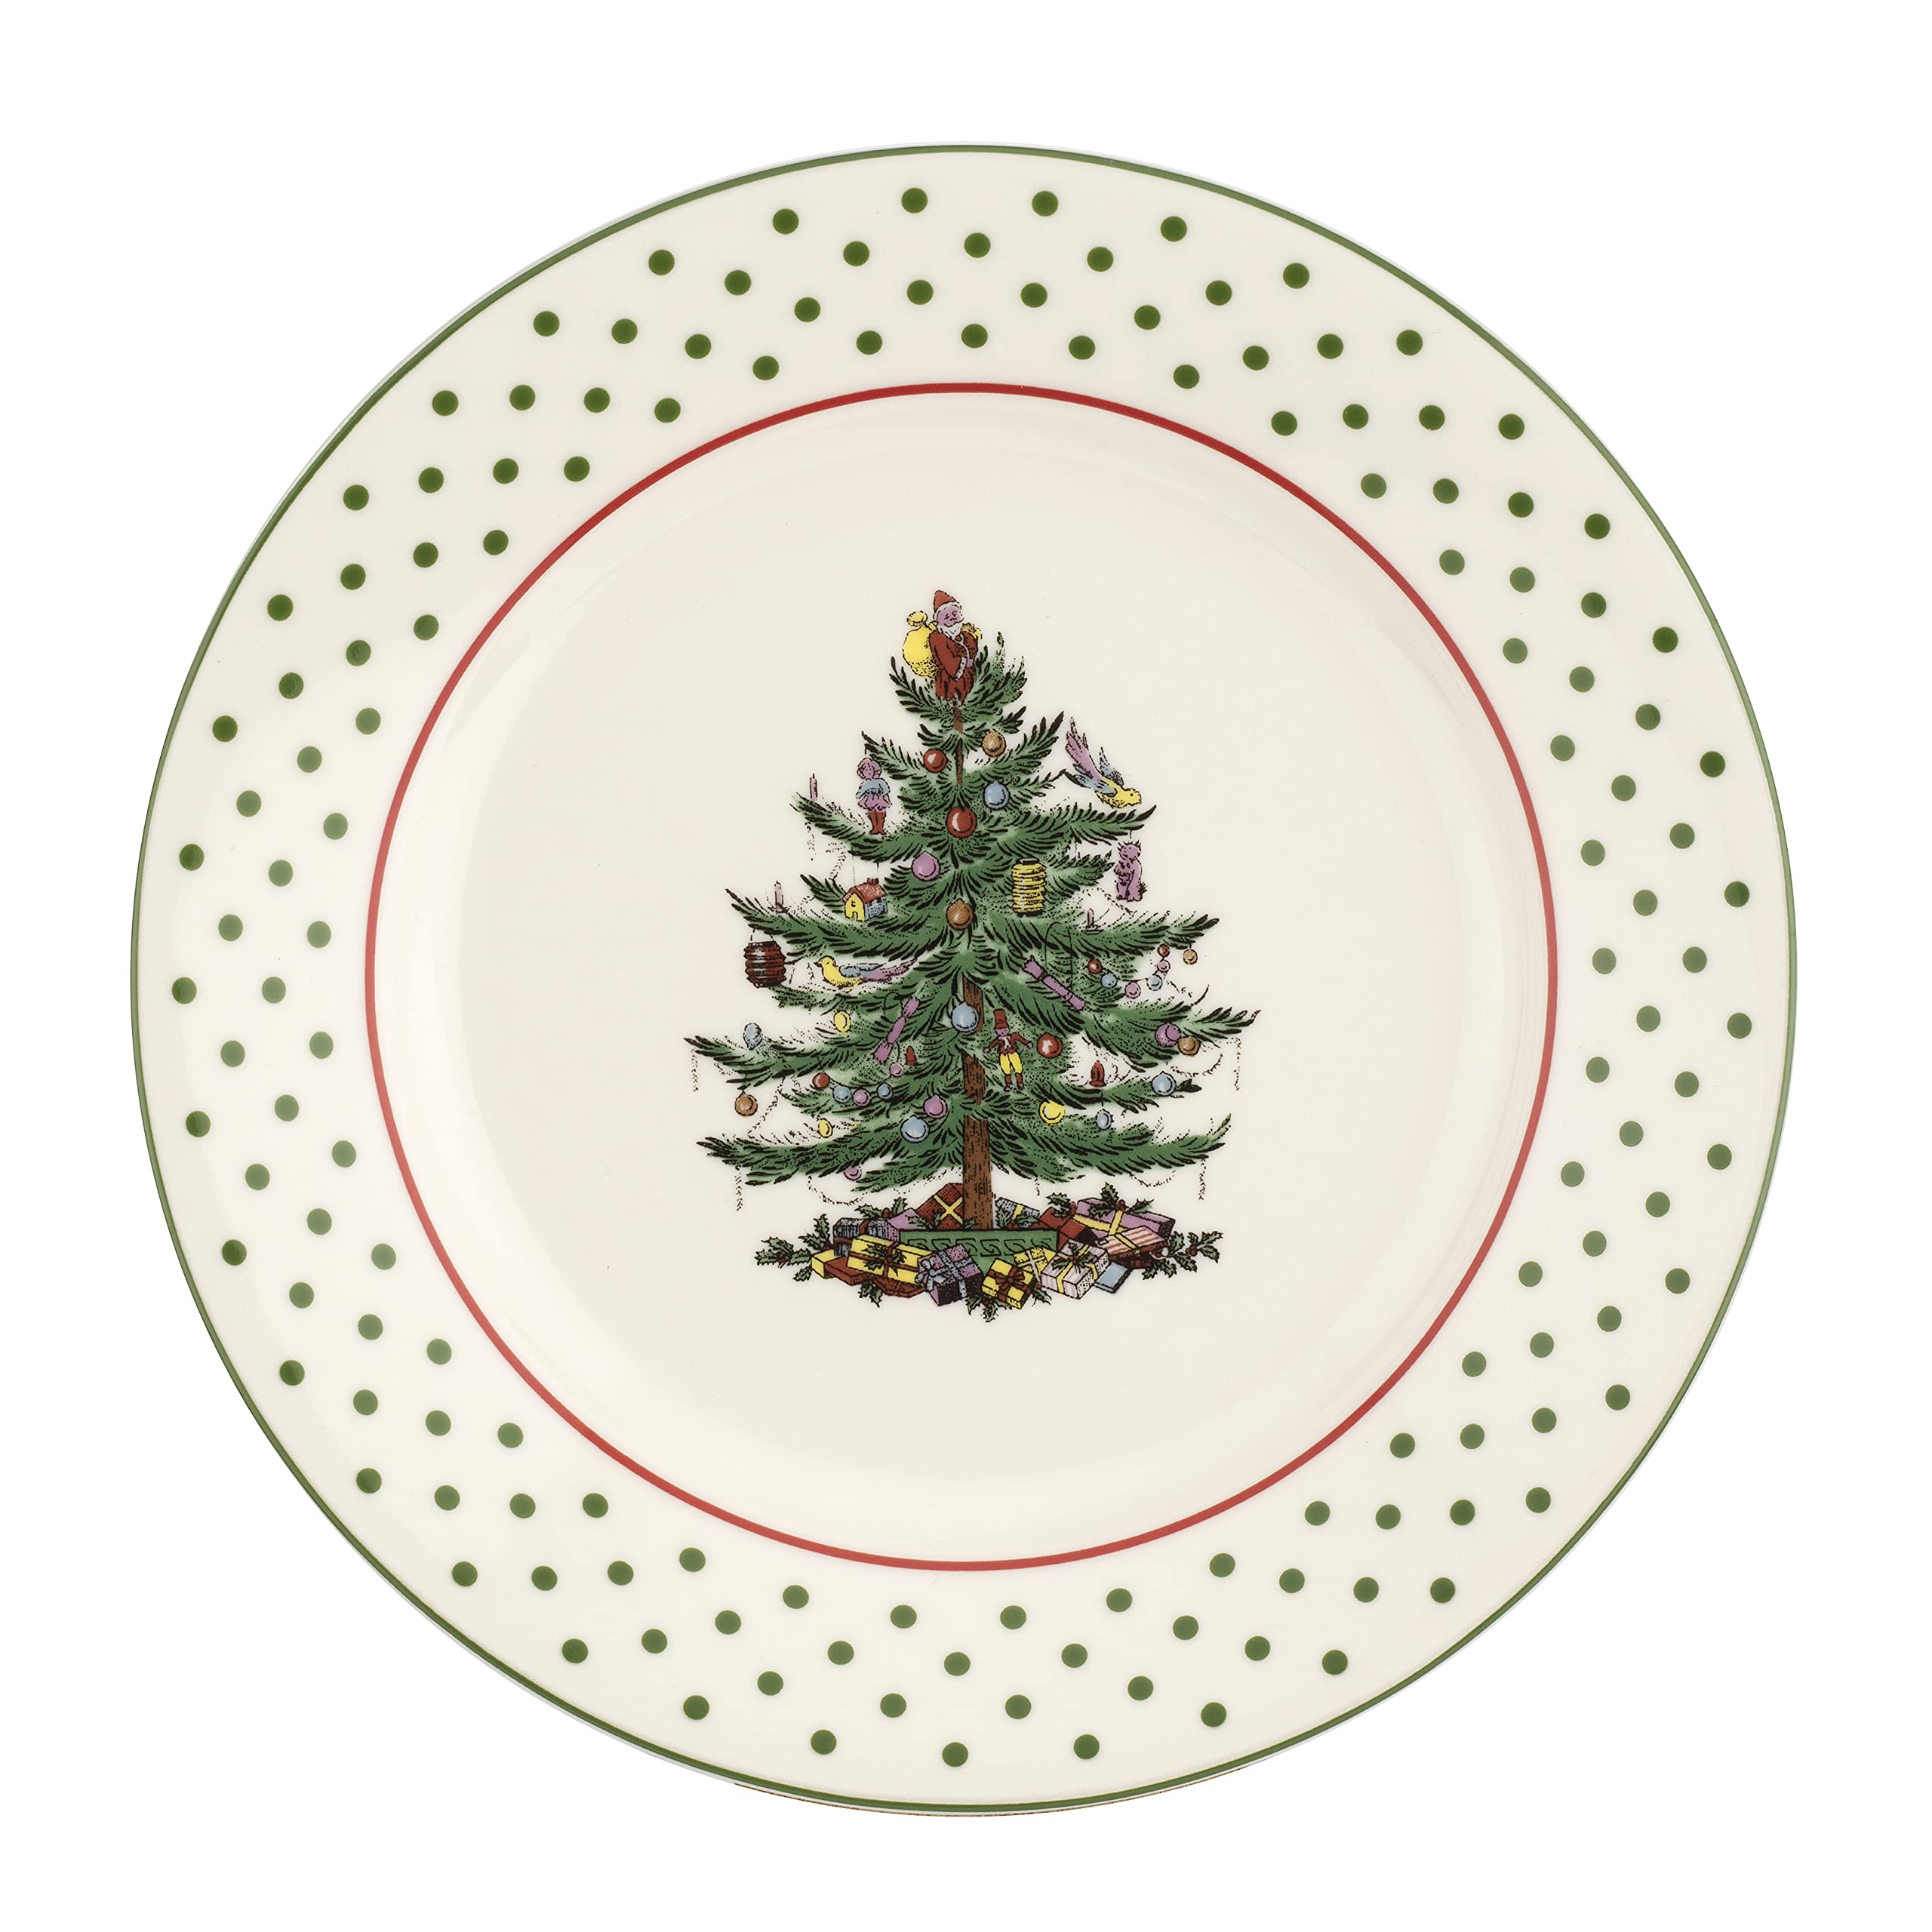 Spode christmas Tree collection Dessert Plates, Set of 4, Polka Dot Design, Use for Dessert, Appetizers, or Salad, Measures at 8